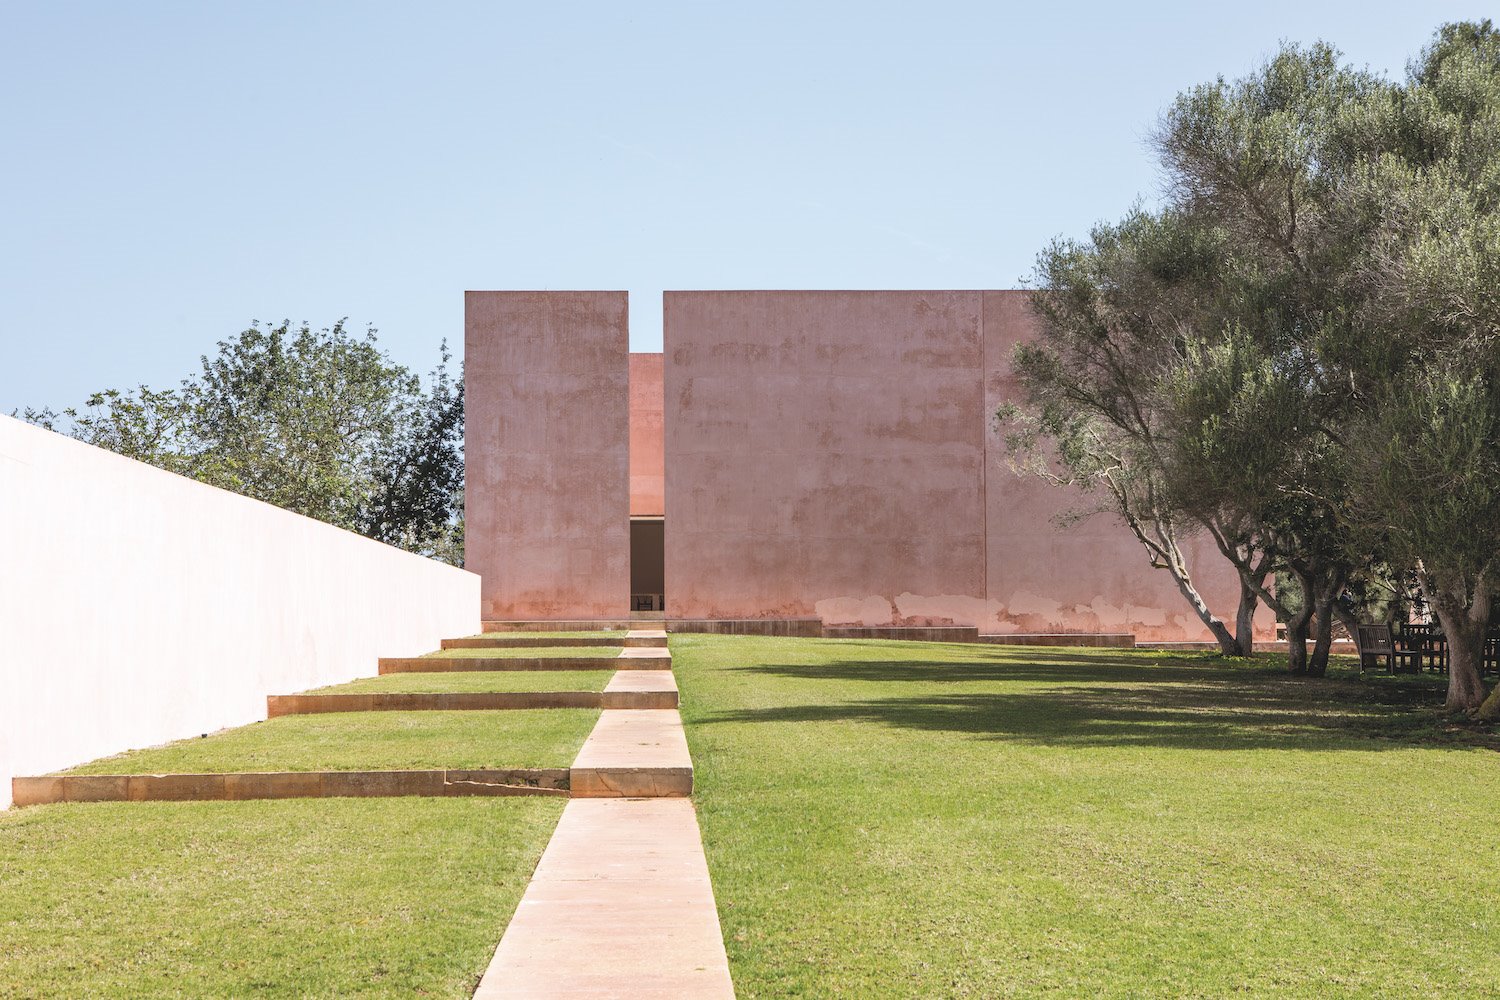 Casa de color rosa de claudio Silvestrin y John pawson en Mallorca entrada